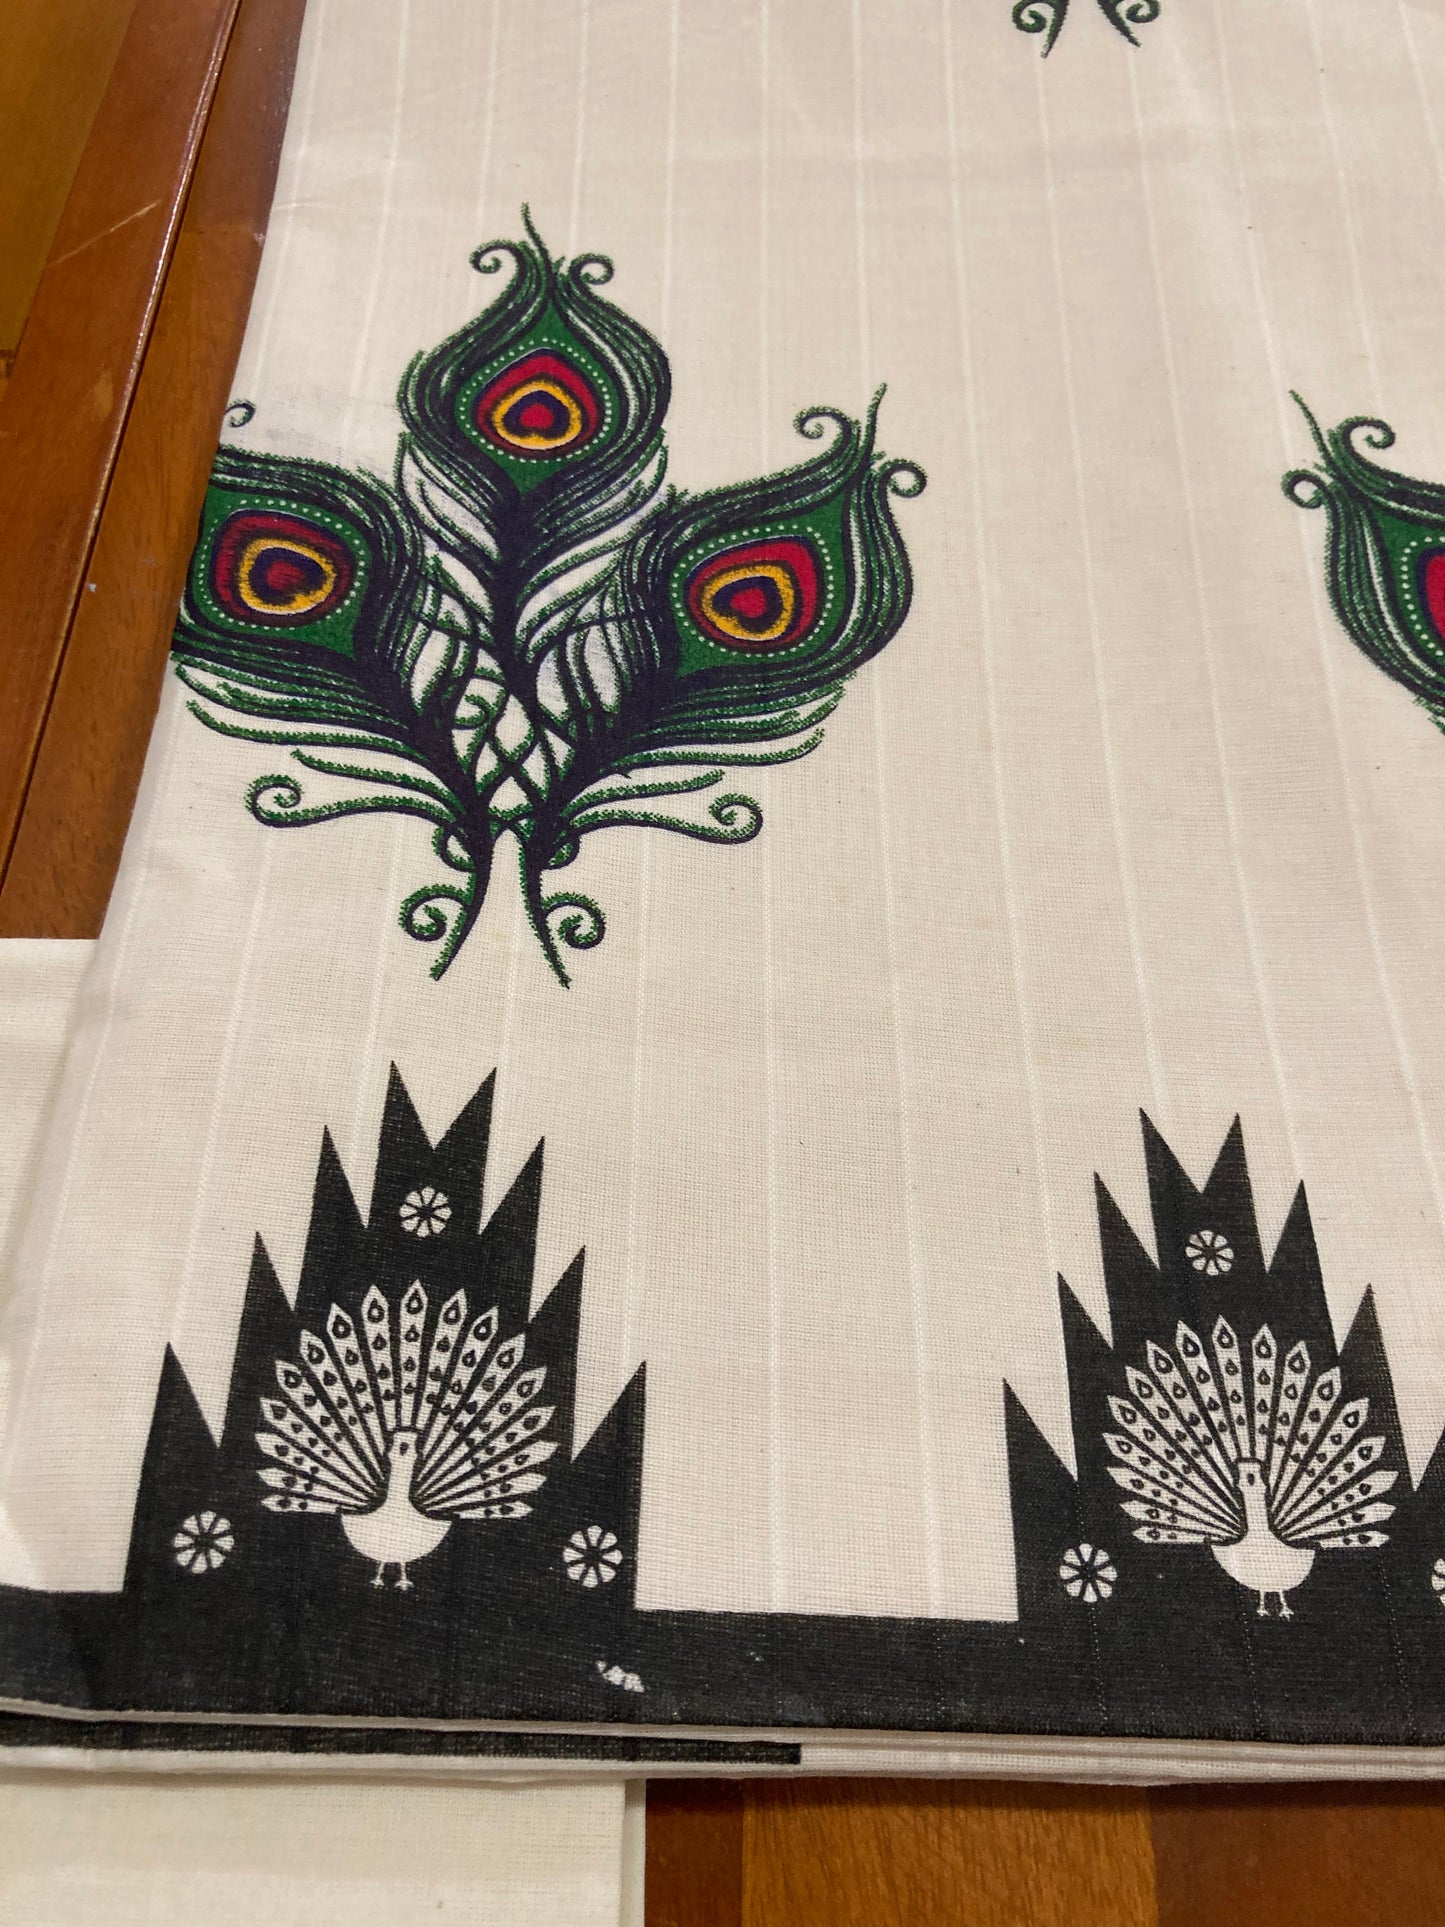 Kerala Cotton Churidar Salwar Material with Mural Printed Peacock Feather Design (include Striped Shawl / Dupatta)